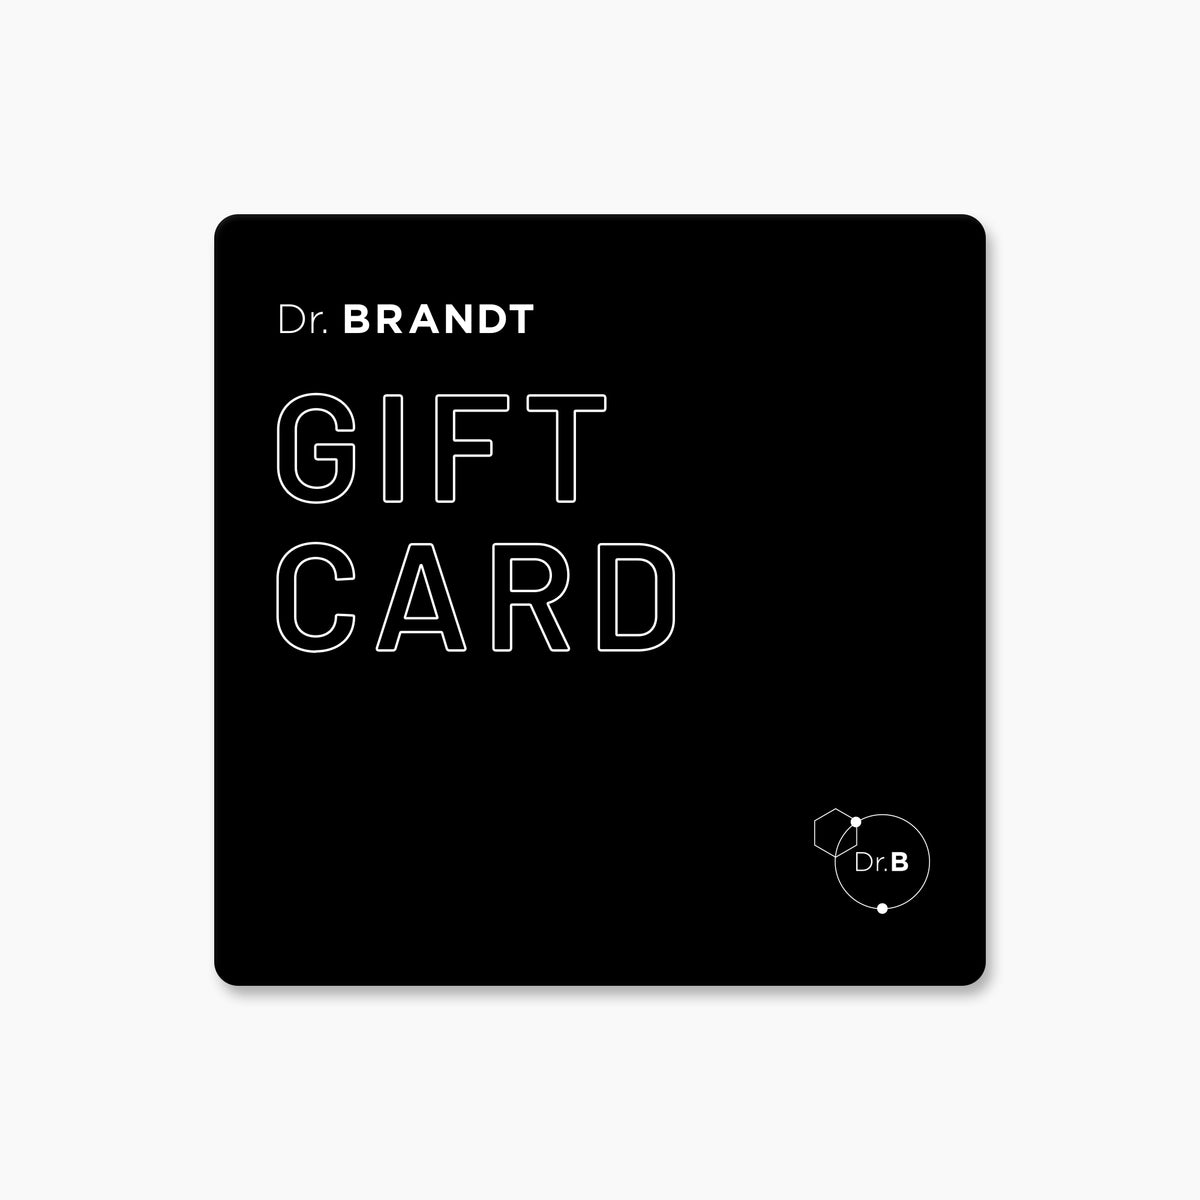 e-gift card